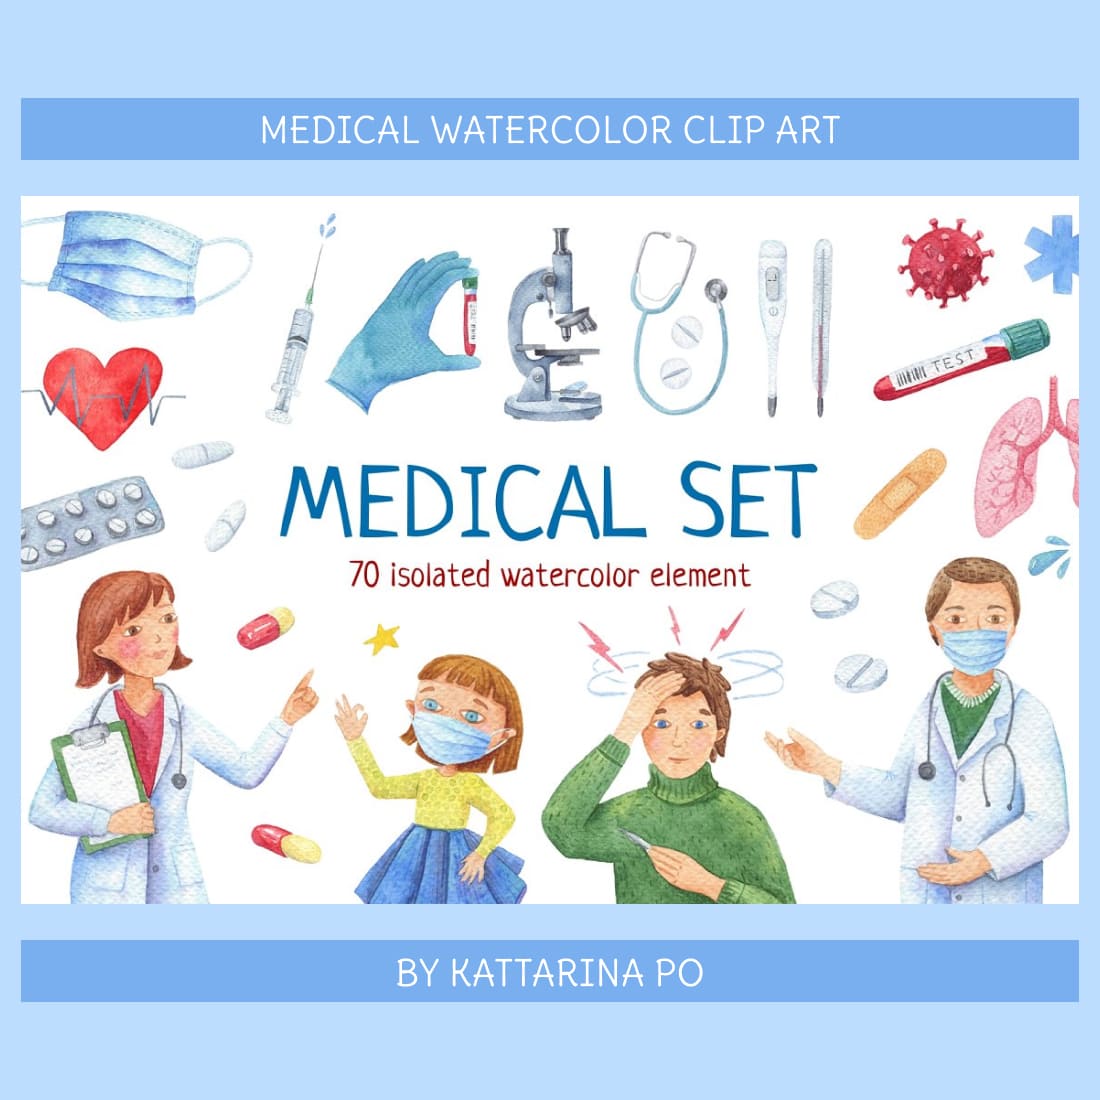 medical watercolor clip art cover image.